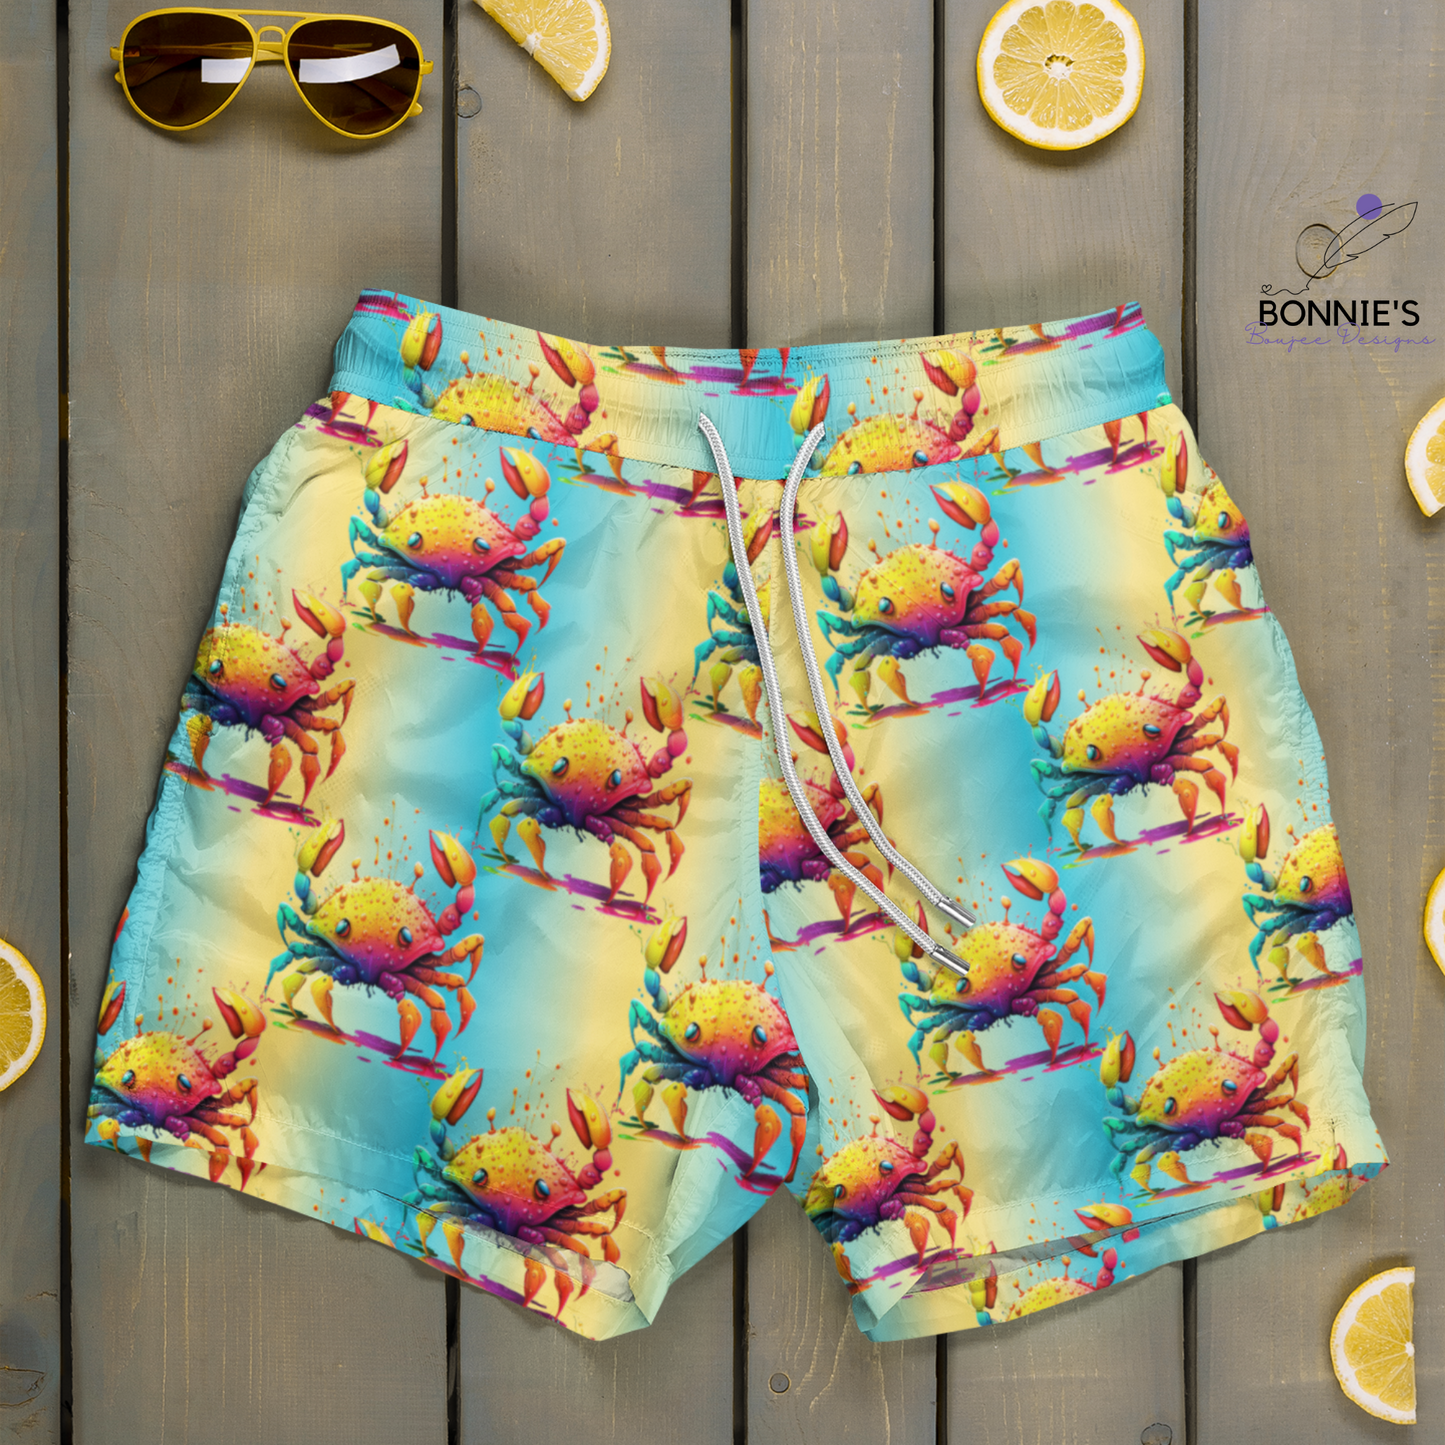 Summer Beach Crab Seamless Pattern